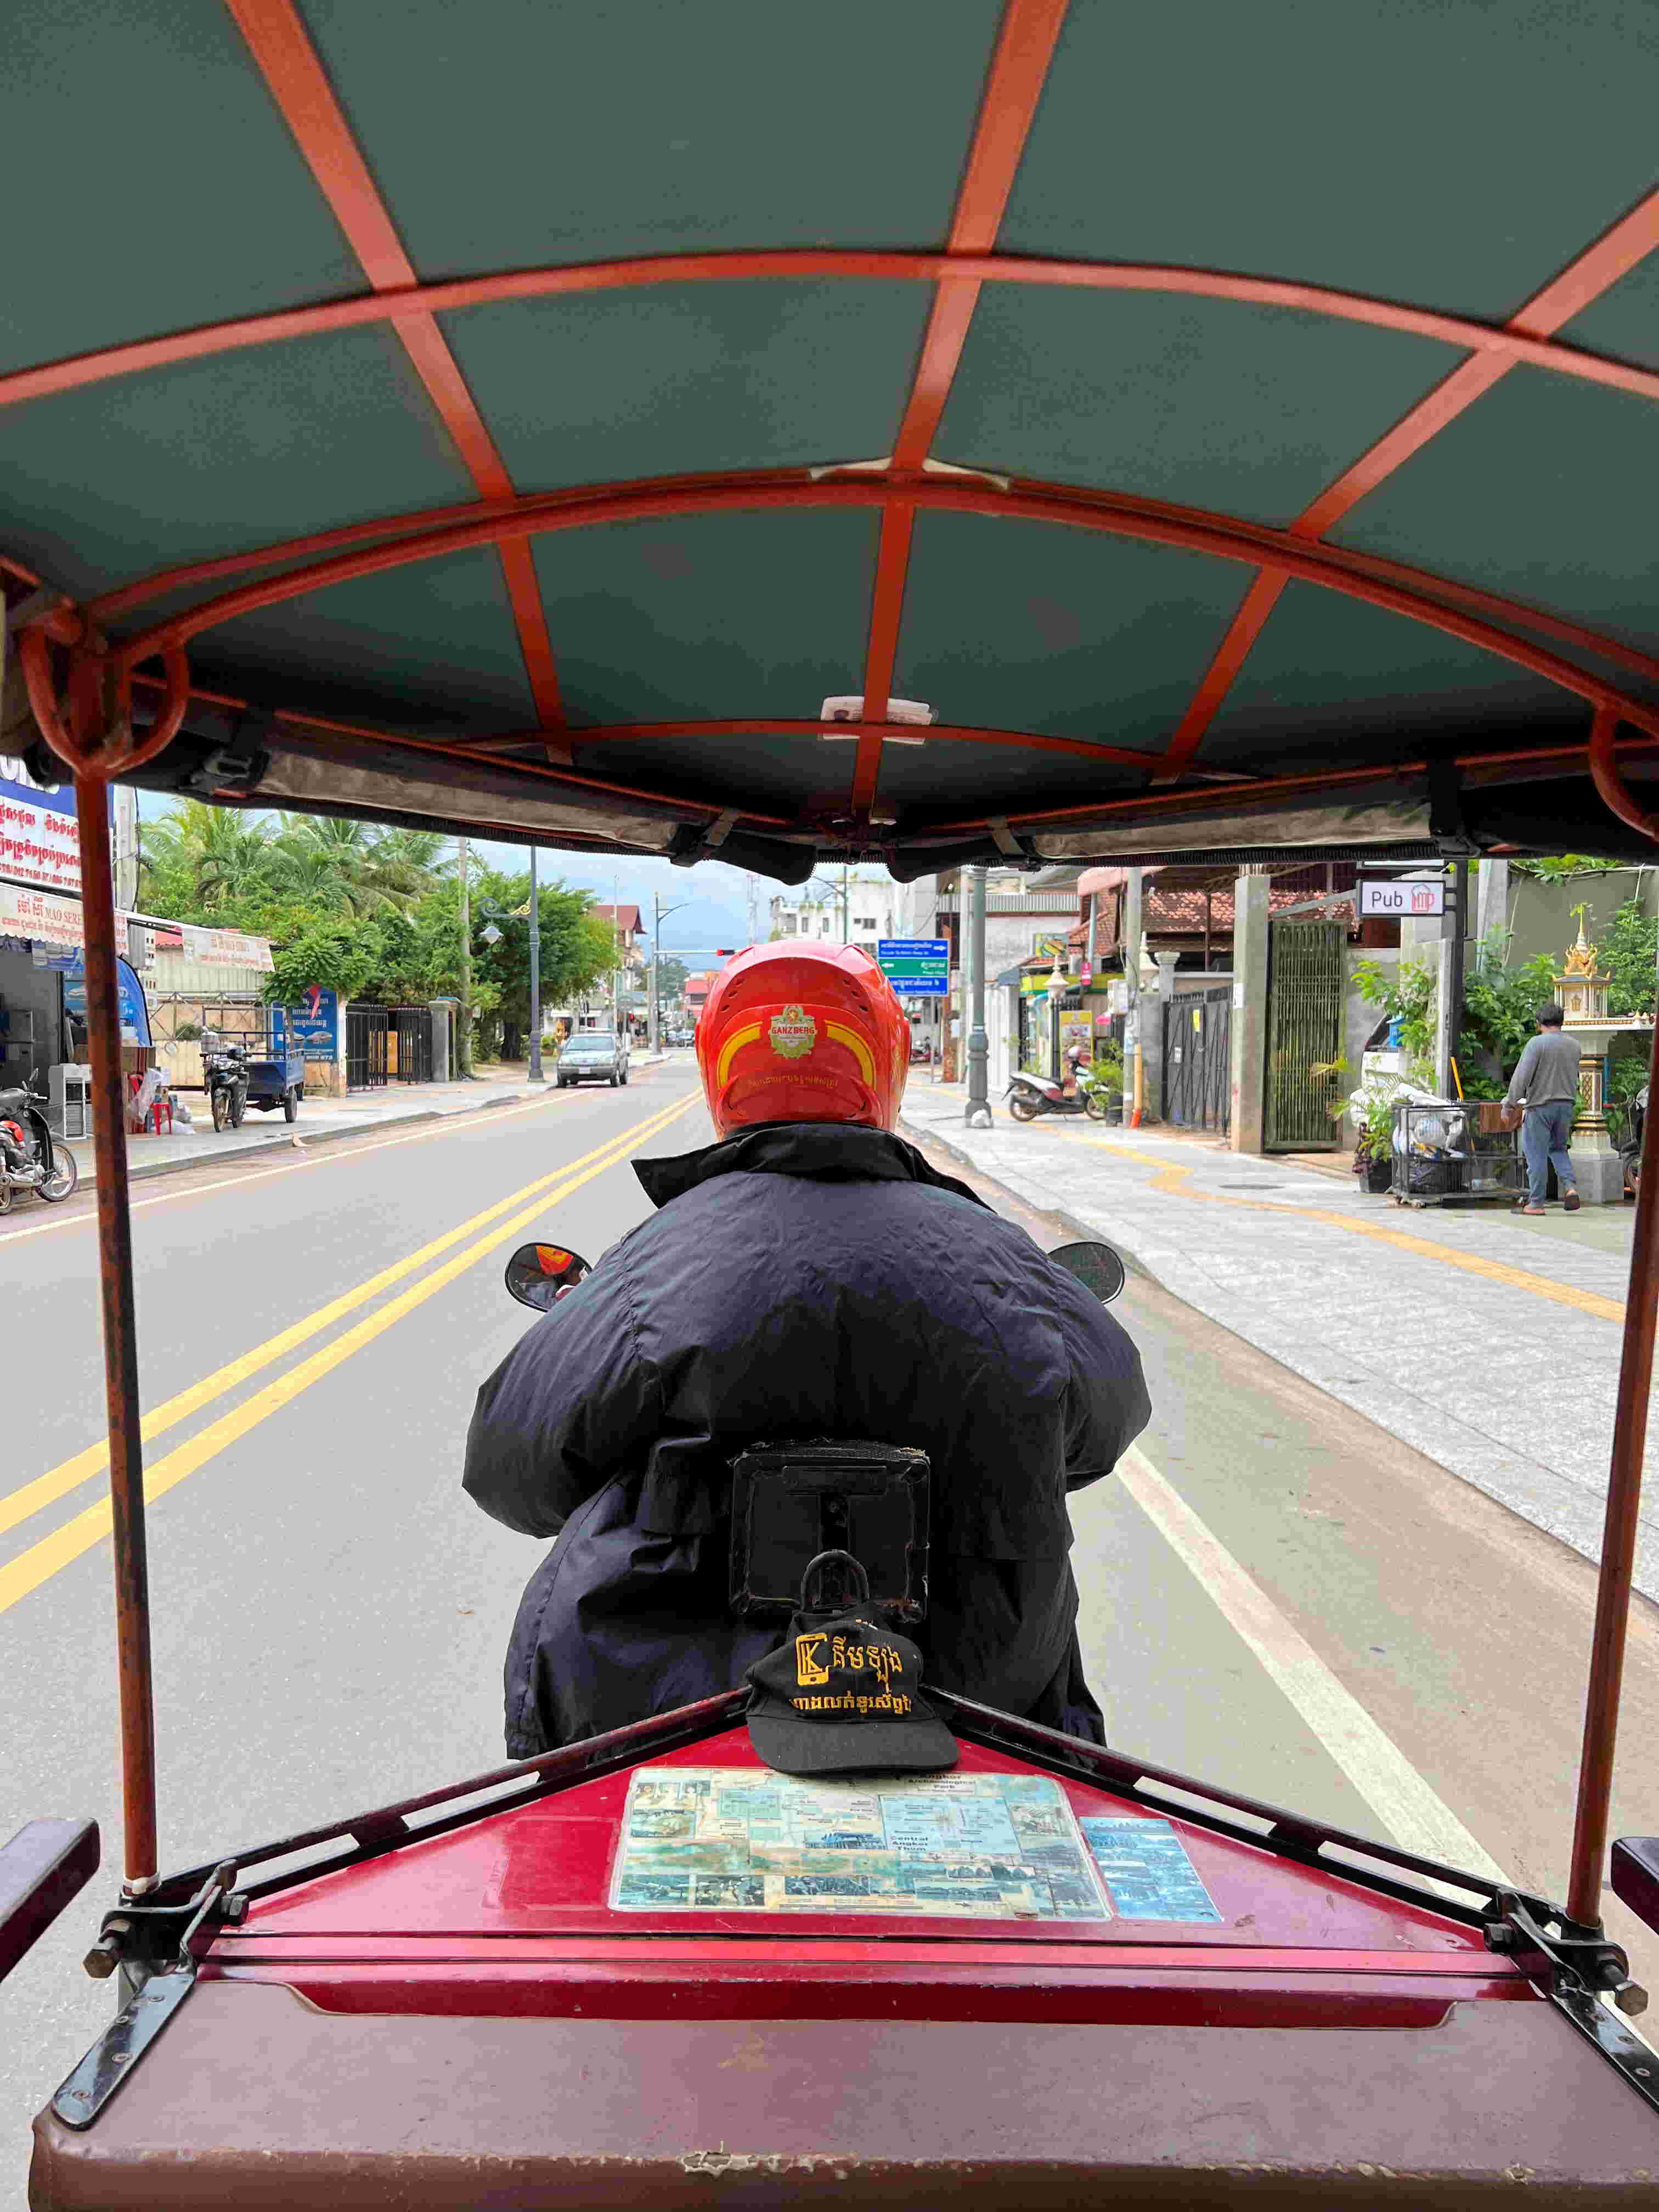  Tuk Tuk motorcycle taxi